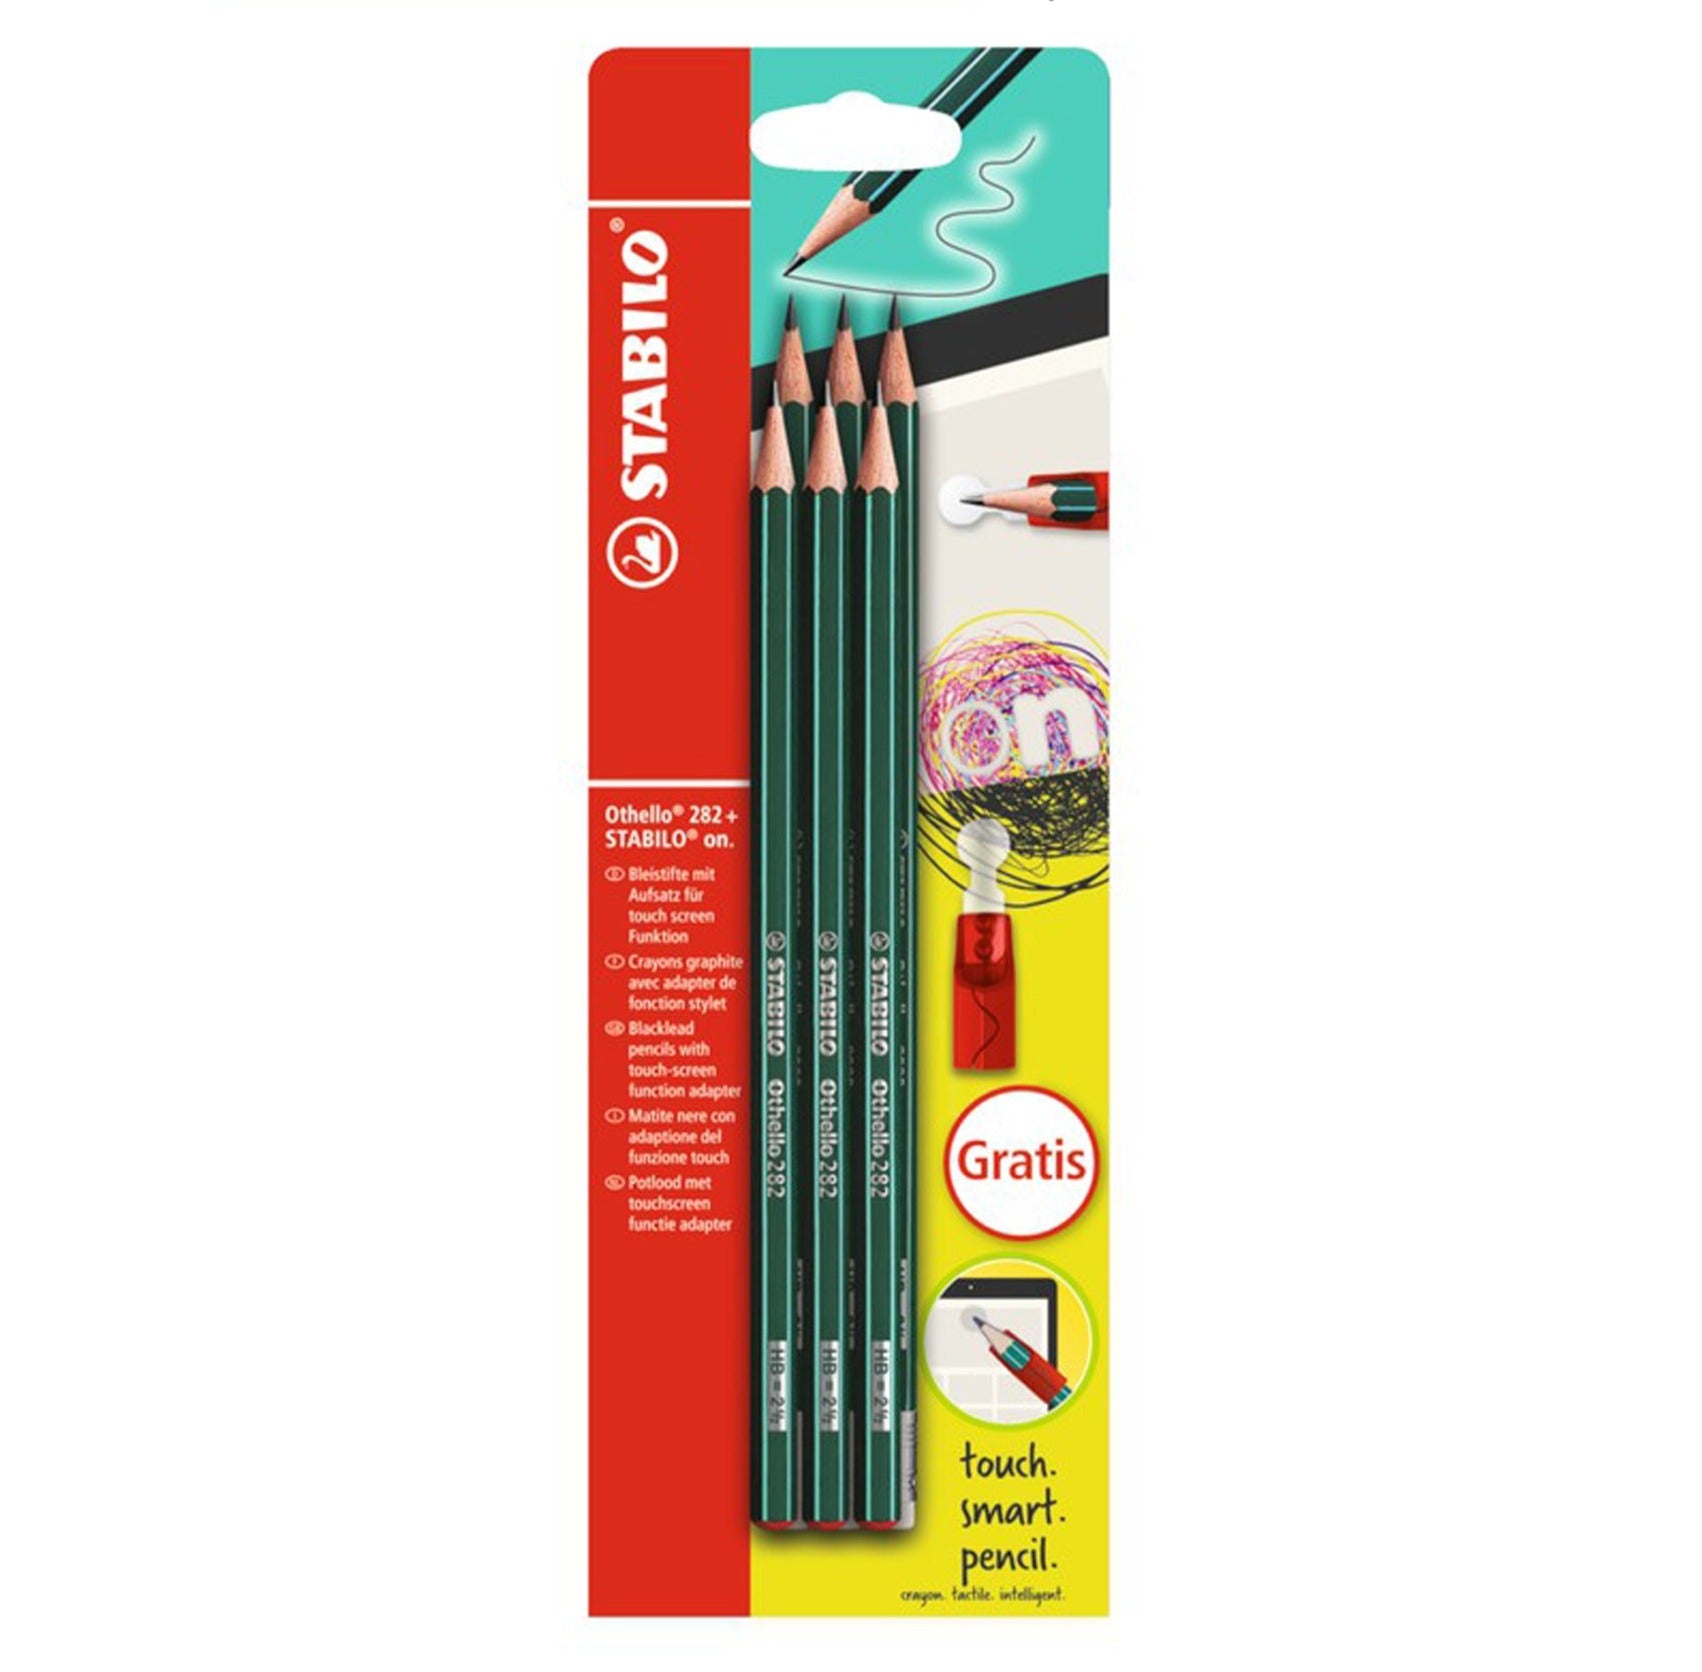 STABILO Othello 282+ Graphite pencil set of 6 - Schwan-STABILO -Most colourful Stationery Shop